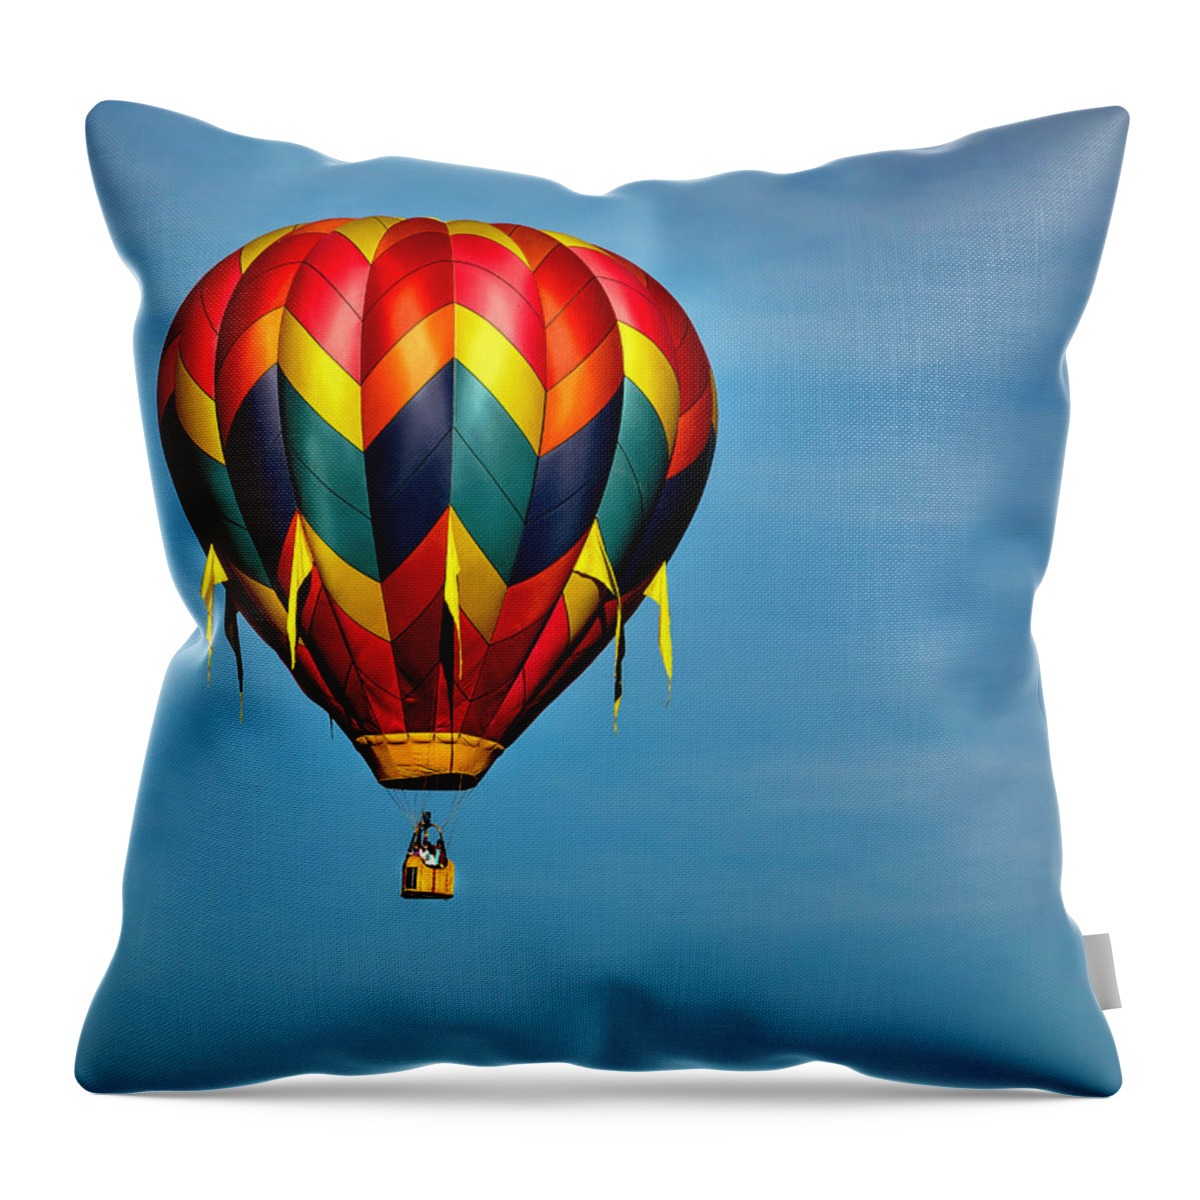 Hot Air Balloon Throw Pillow featuring the photograph Hot Air Balloon in Flight 4 by James Sage